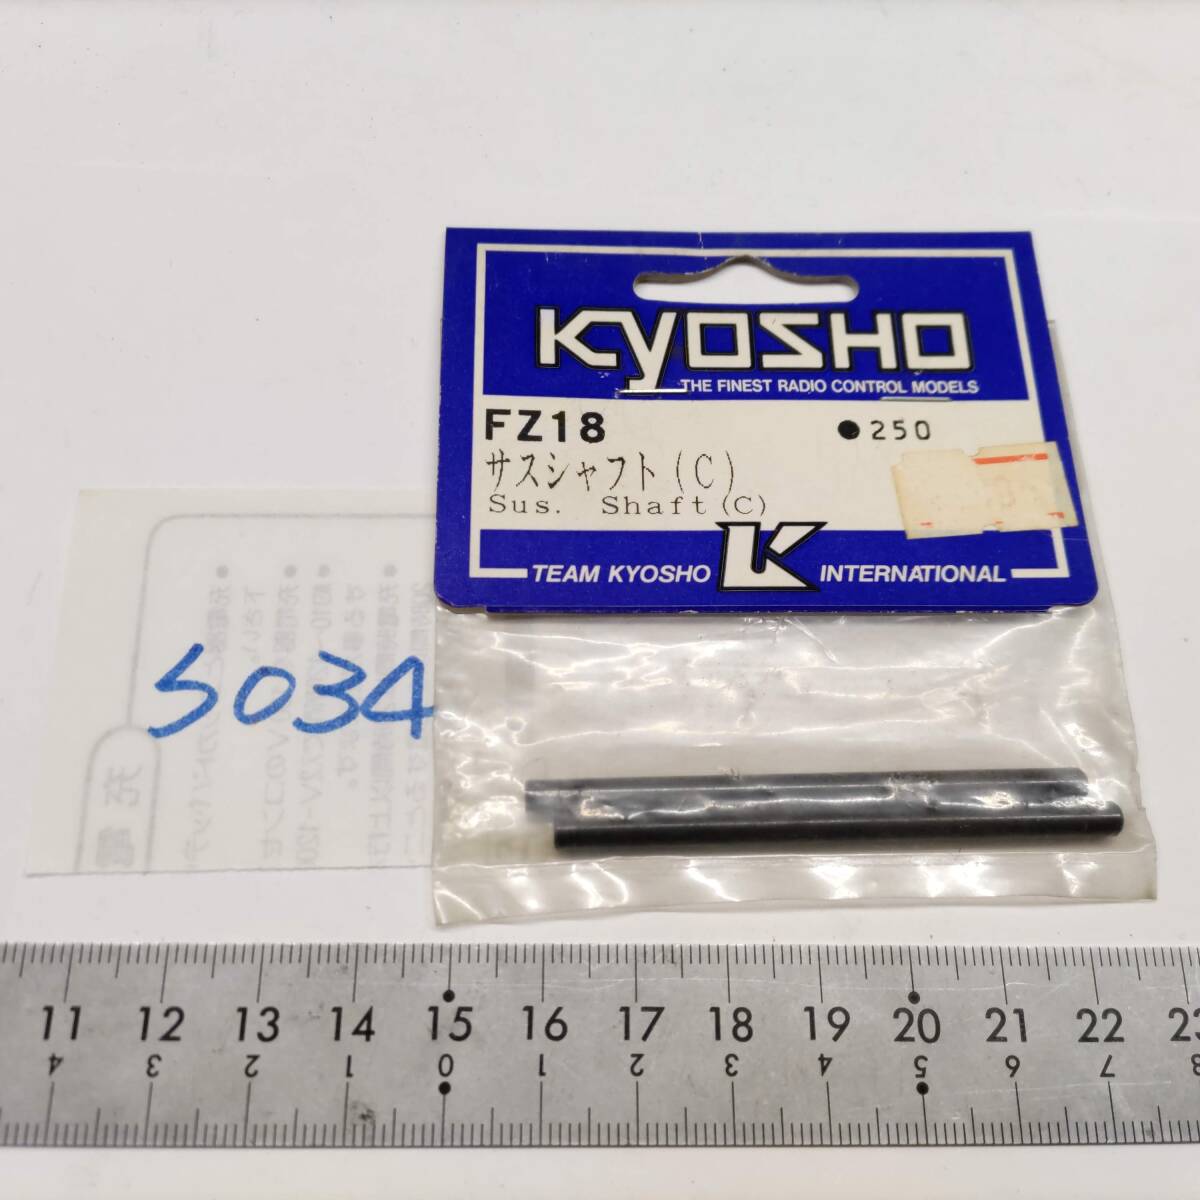 S034 KYOSHO Kyosho FZ18 suspension shaft (C) Sus. Shaft(C) unopened long-term keeping goods 